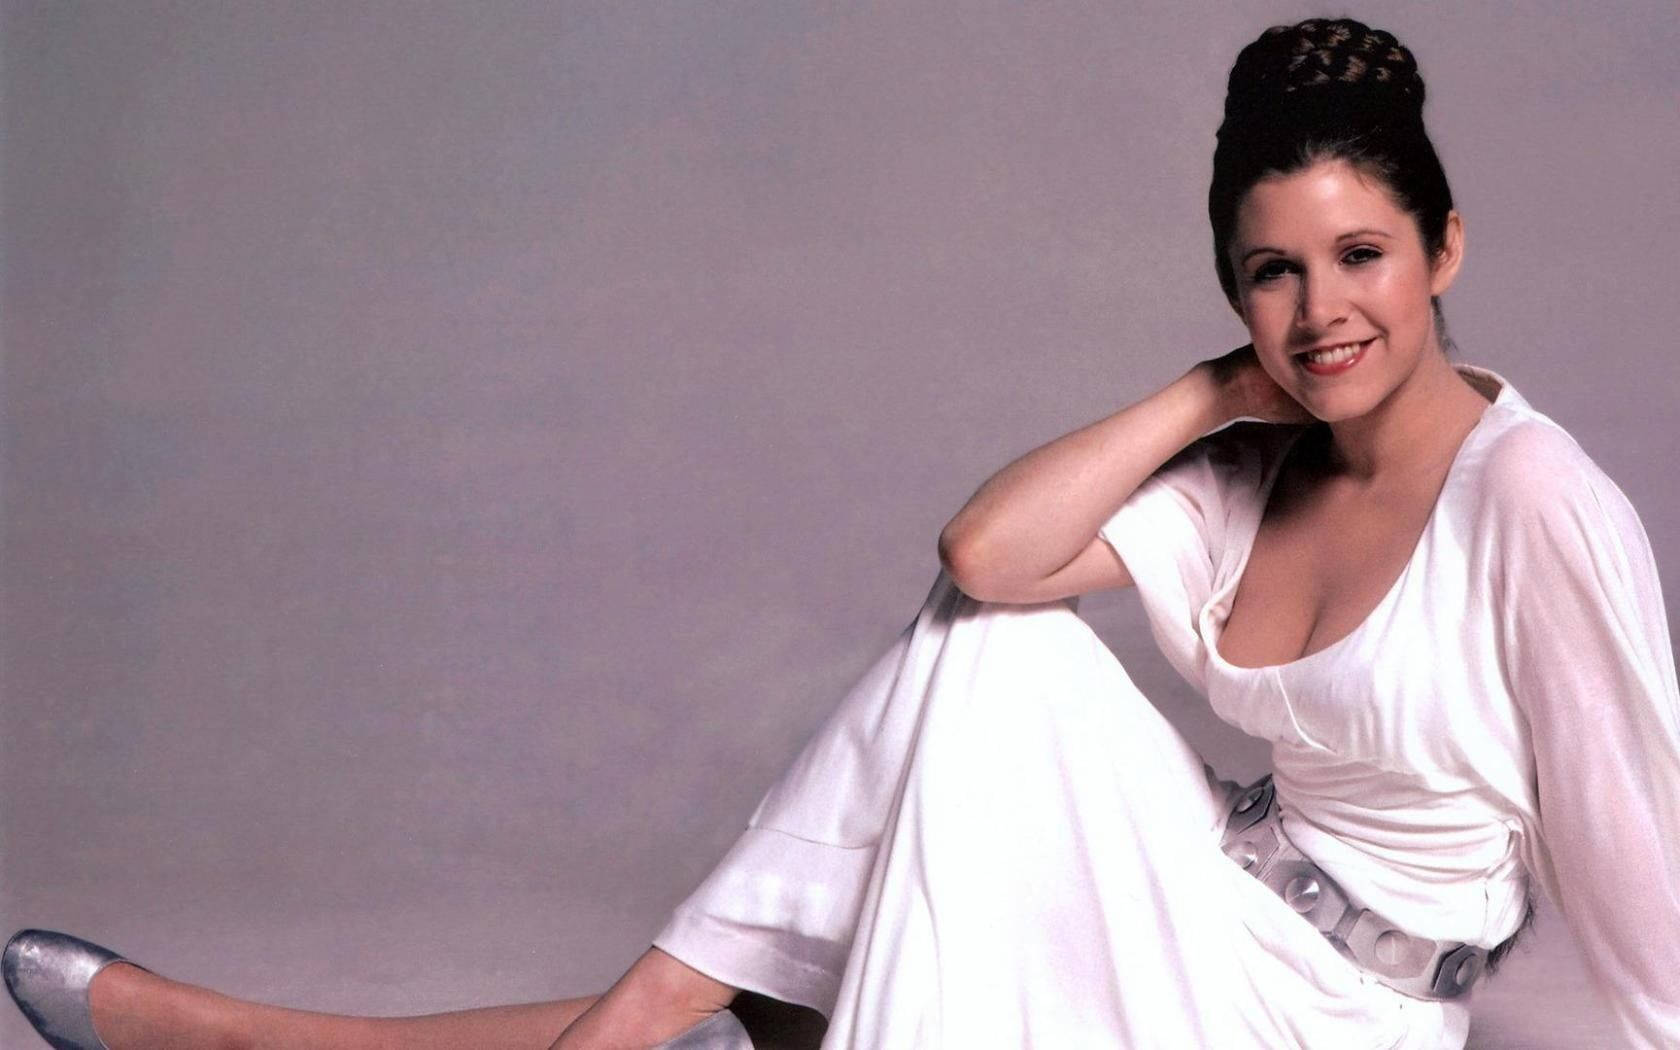 Carrie Fisher Princess Leia Photoshoot Wallpaper